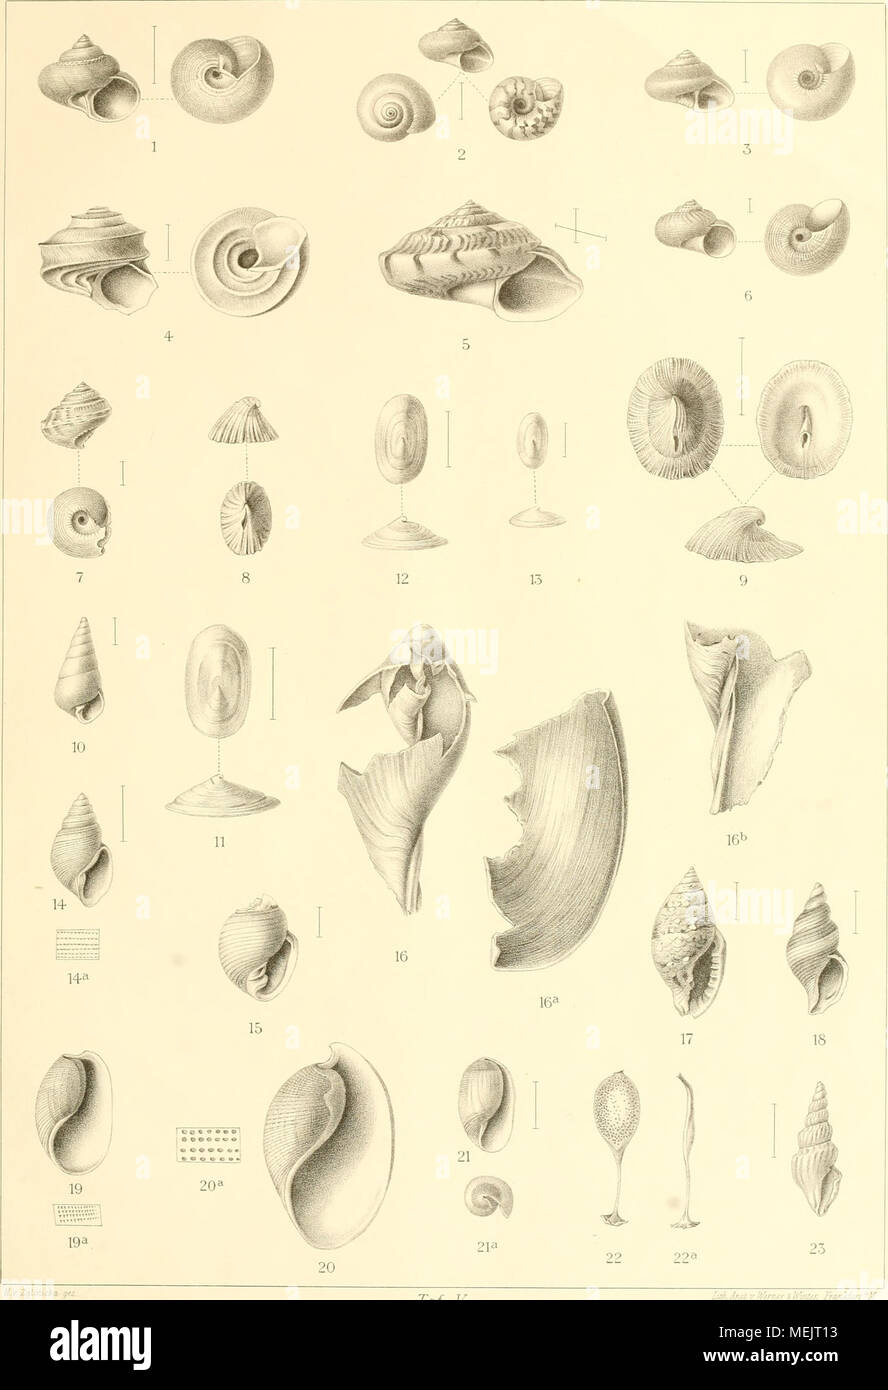 . Die beschalten Gasteropoden der deutschen Tiefsee-Expedition, 1898-1899 . Taf. l I. Solariella periompkalia. — 2. S. laevissima. — 3. S. biradiatnla. — 4. Liotia bicarinata. — 5. Minolia undata. 6. Cyclostrema semisculptuni. — 7. Minolia dilecta. — 8. Punctiirella analoga. — 9. P. aethiopica. — 10. Pyramidella nisoides. — //, 12. Cocculina laevis. — 13. C. radiata. — 14. Actaeon acthiopicus. — !§. Ringicula aethiopica. 16. Marginella gigas. — ij. Columbella seychellarum. — 18. Lackesis australis. — ig. Scaphander cancellatu.';. 20. Atys jnillepimctatus. — 21. Volvula flavotincta. — 22. Eikap Stock Photo